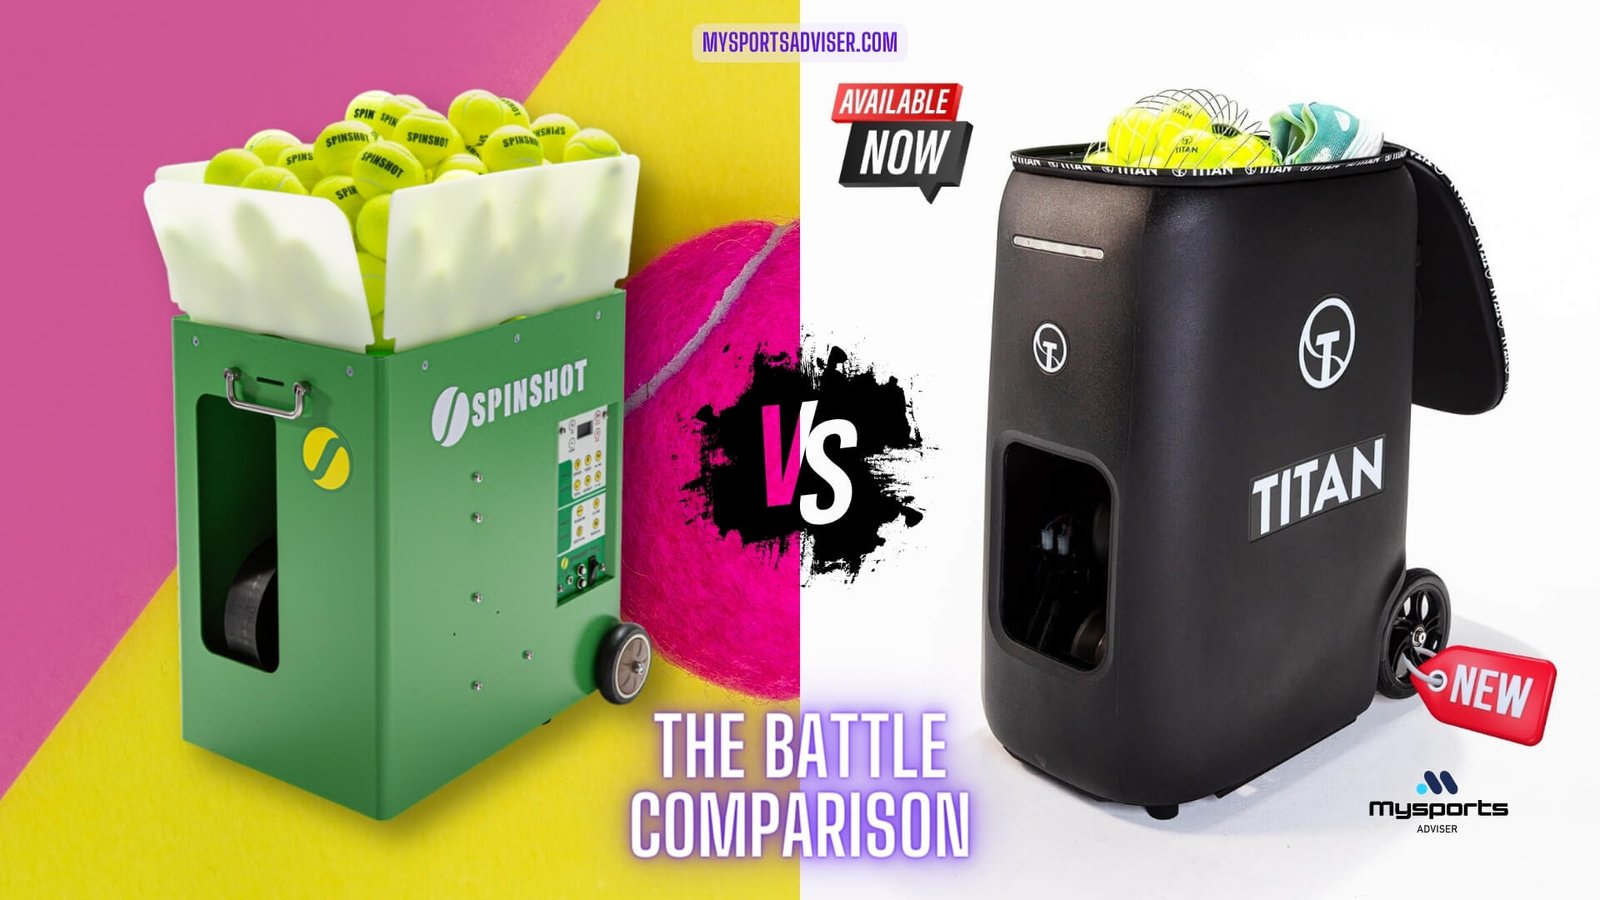 Spinshot Plus 2 Tennis Ball Machine vs Titan One comparison chart discount and coupon code